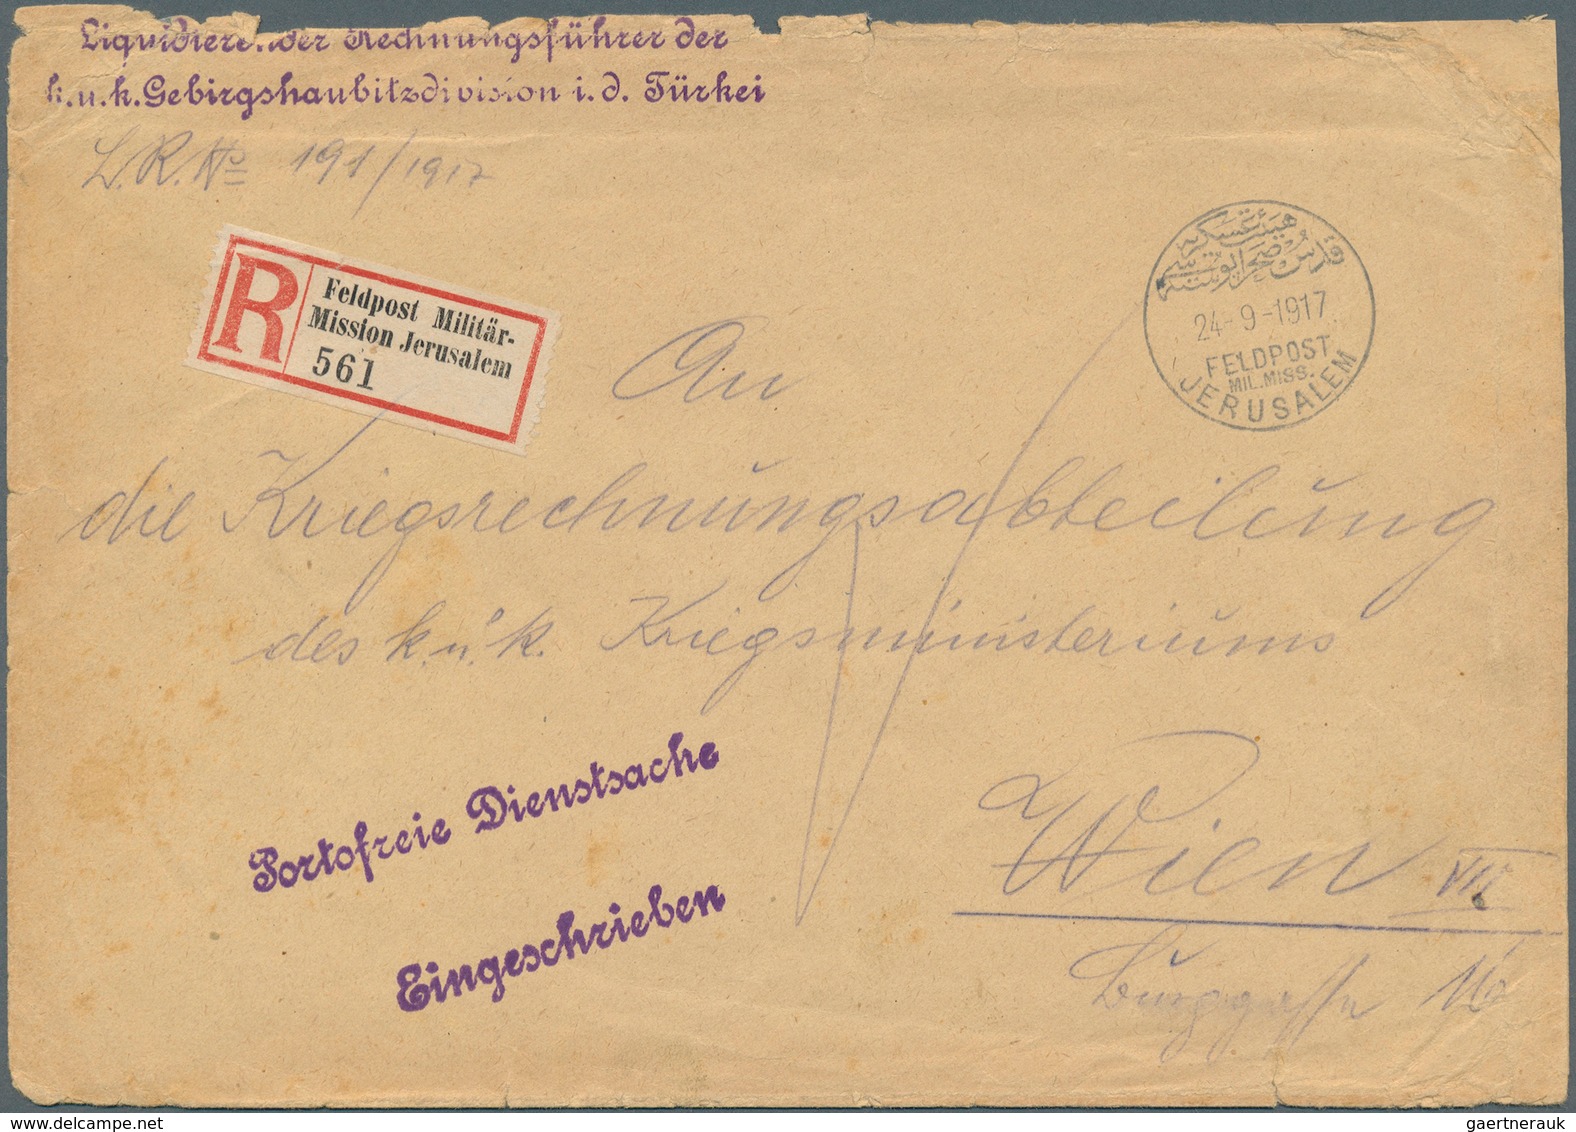 00341 Holyland: 1917, Registered Cover "Portofreie Dienstsache" From "JERUSALEM FELDPOST MIL.MISSION 24.9. - Palestina